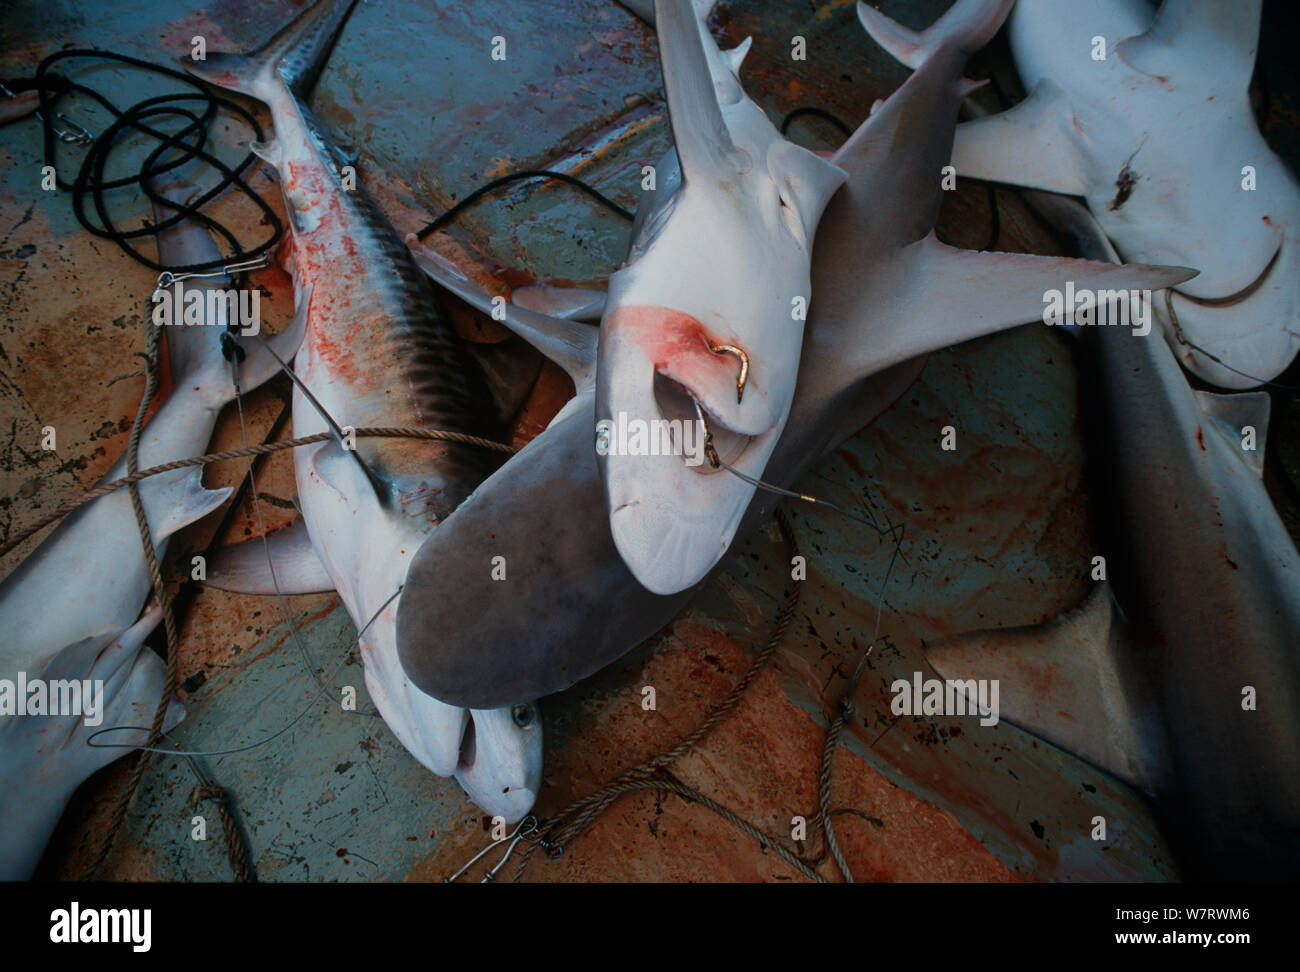 Sand Tiger (Carcharias taurus) and Sandbar (Carcharhinus plumbeus) sharks, caught for fins, Exmouth, Australia, Indian Ocean Stock Photo